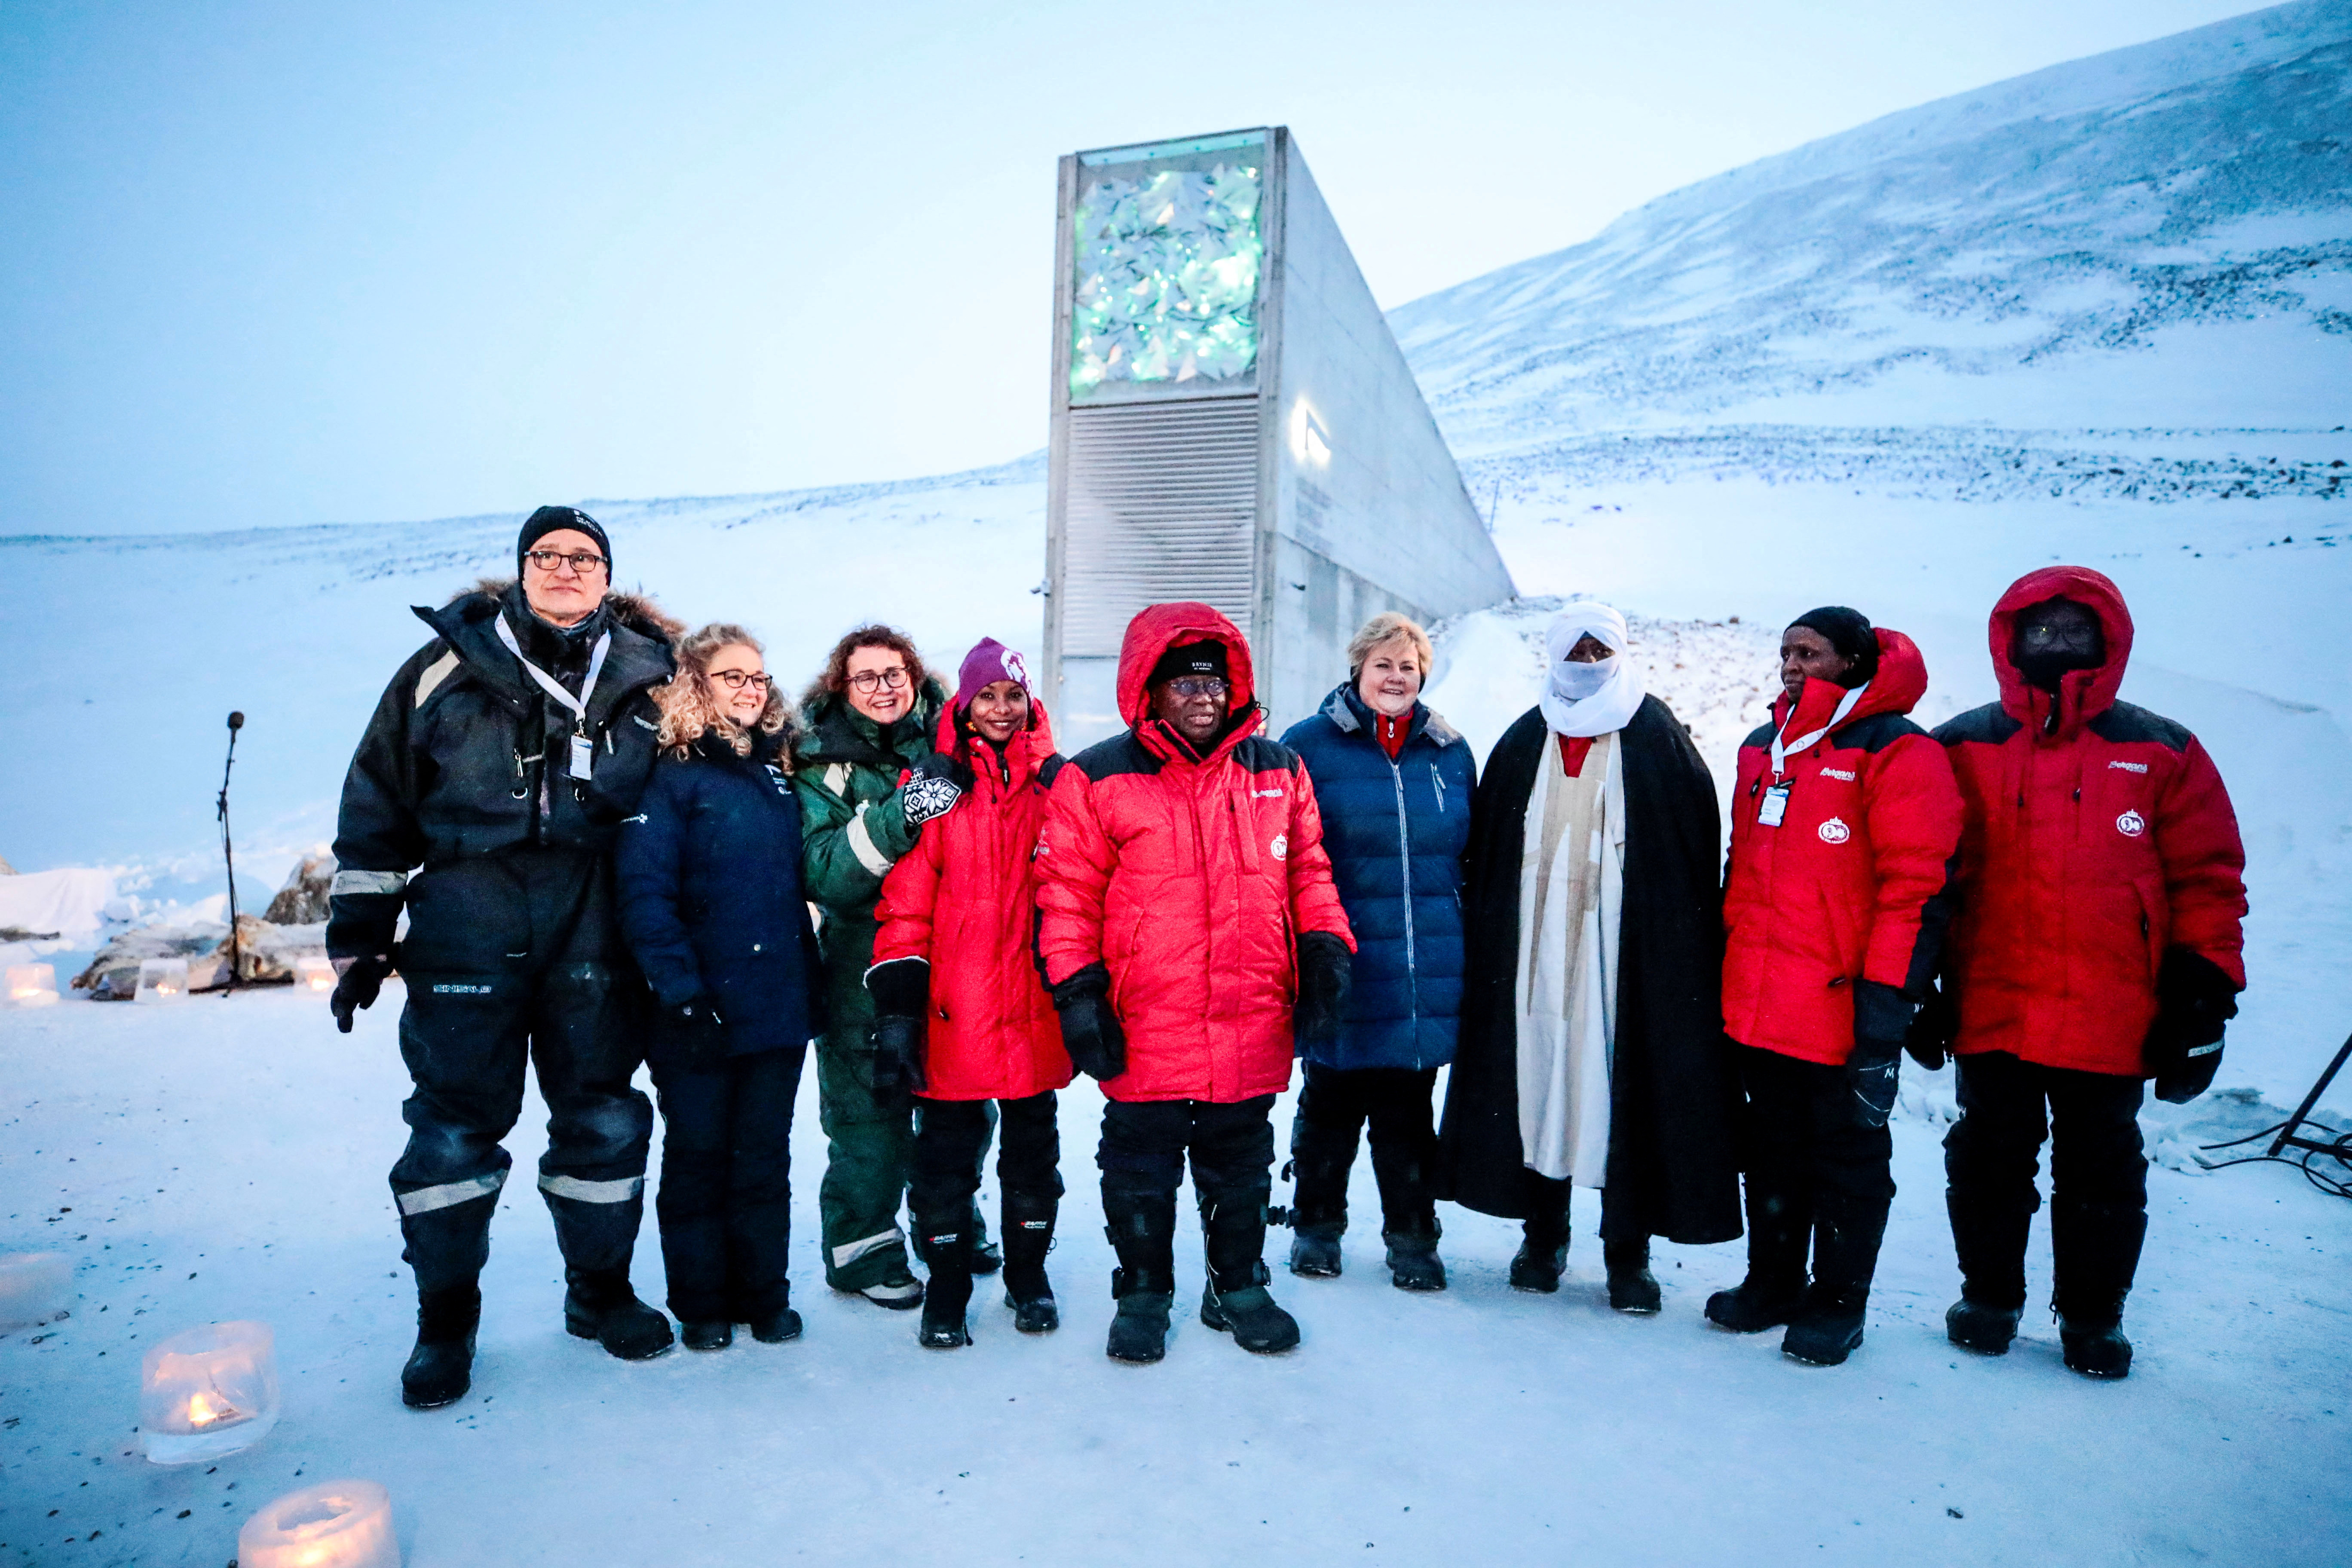 Norway's Prime Minister Erna Solberg, Agriculture and Food Minister Olaug V. Bollestad and Ghana's President Nana Akufo-Addo visit Svalbard's global seed vault in Longyearbyen